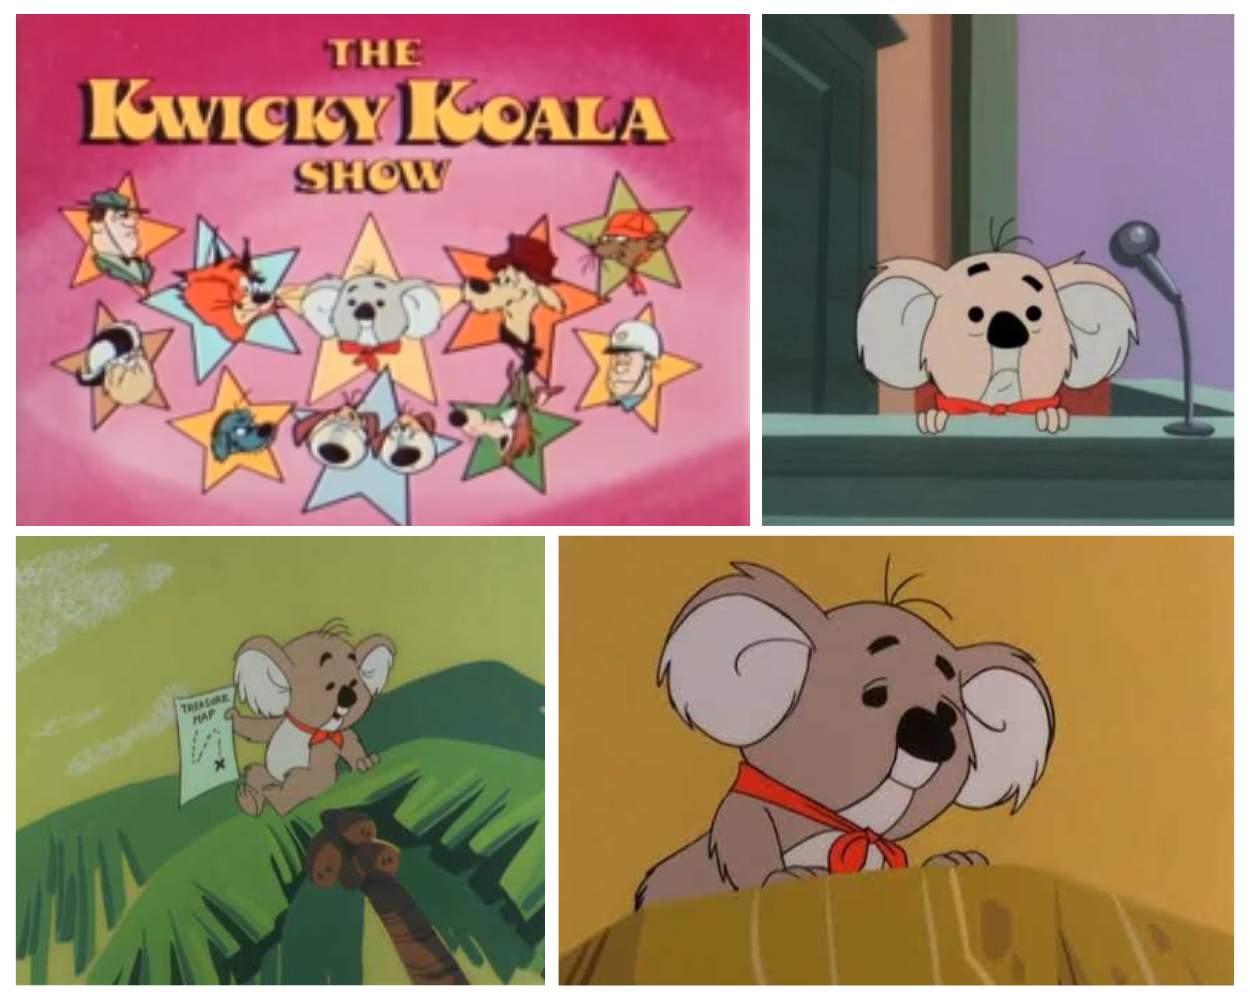 the kwicky koala show